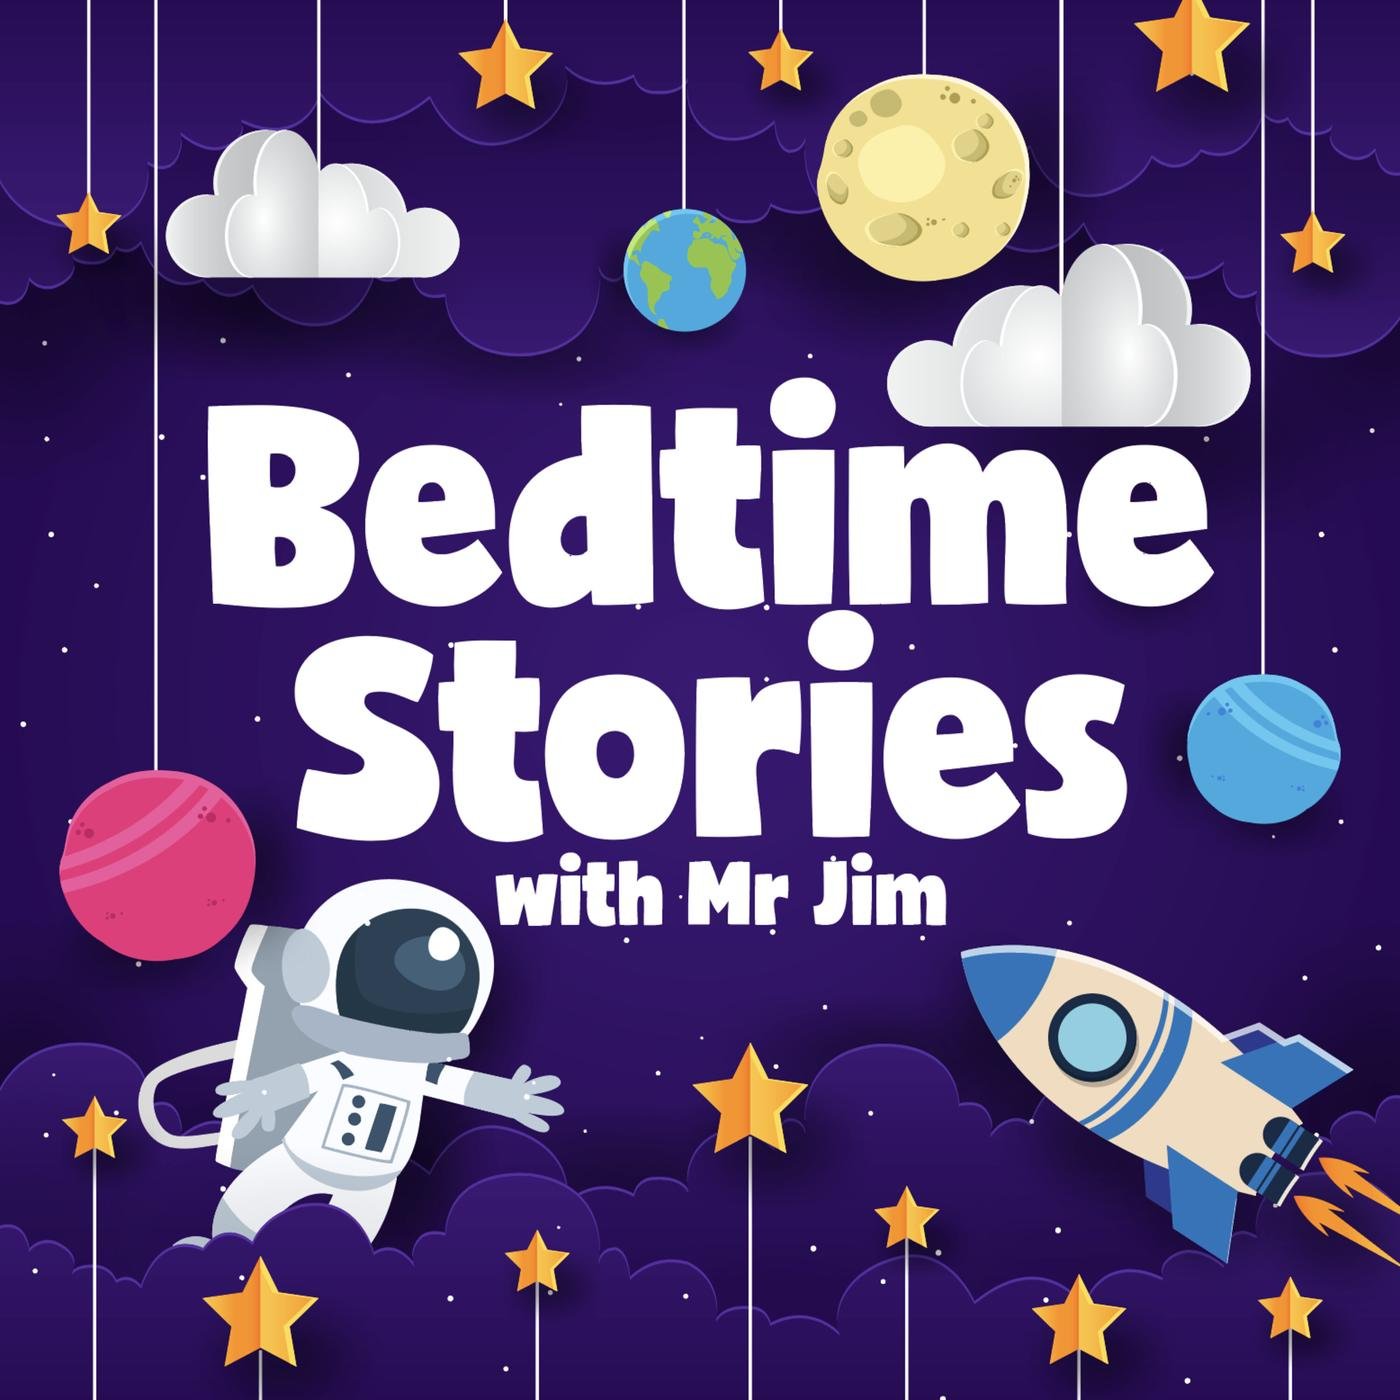 bedtime-stories-with-mr-jim-edwOCzkaHUI-1bJx6tZsayU.1400x1400.jpg